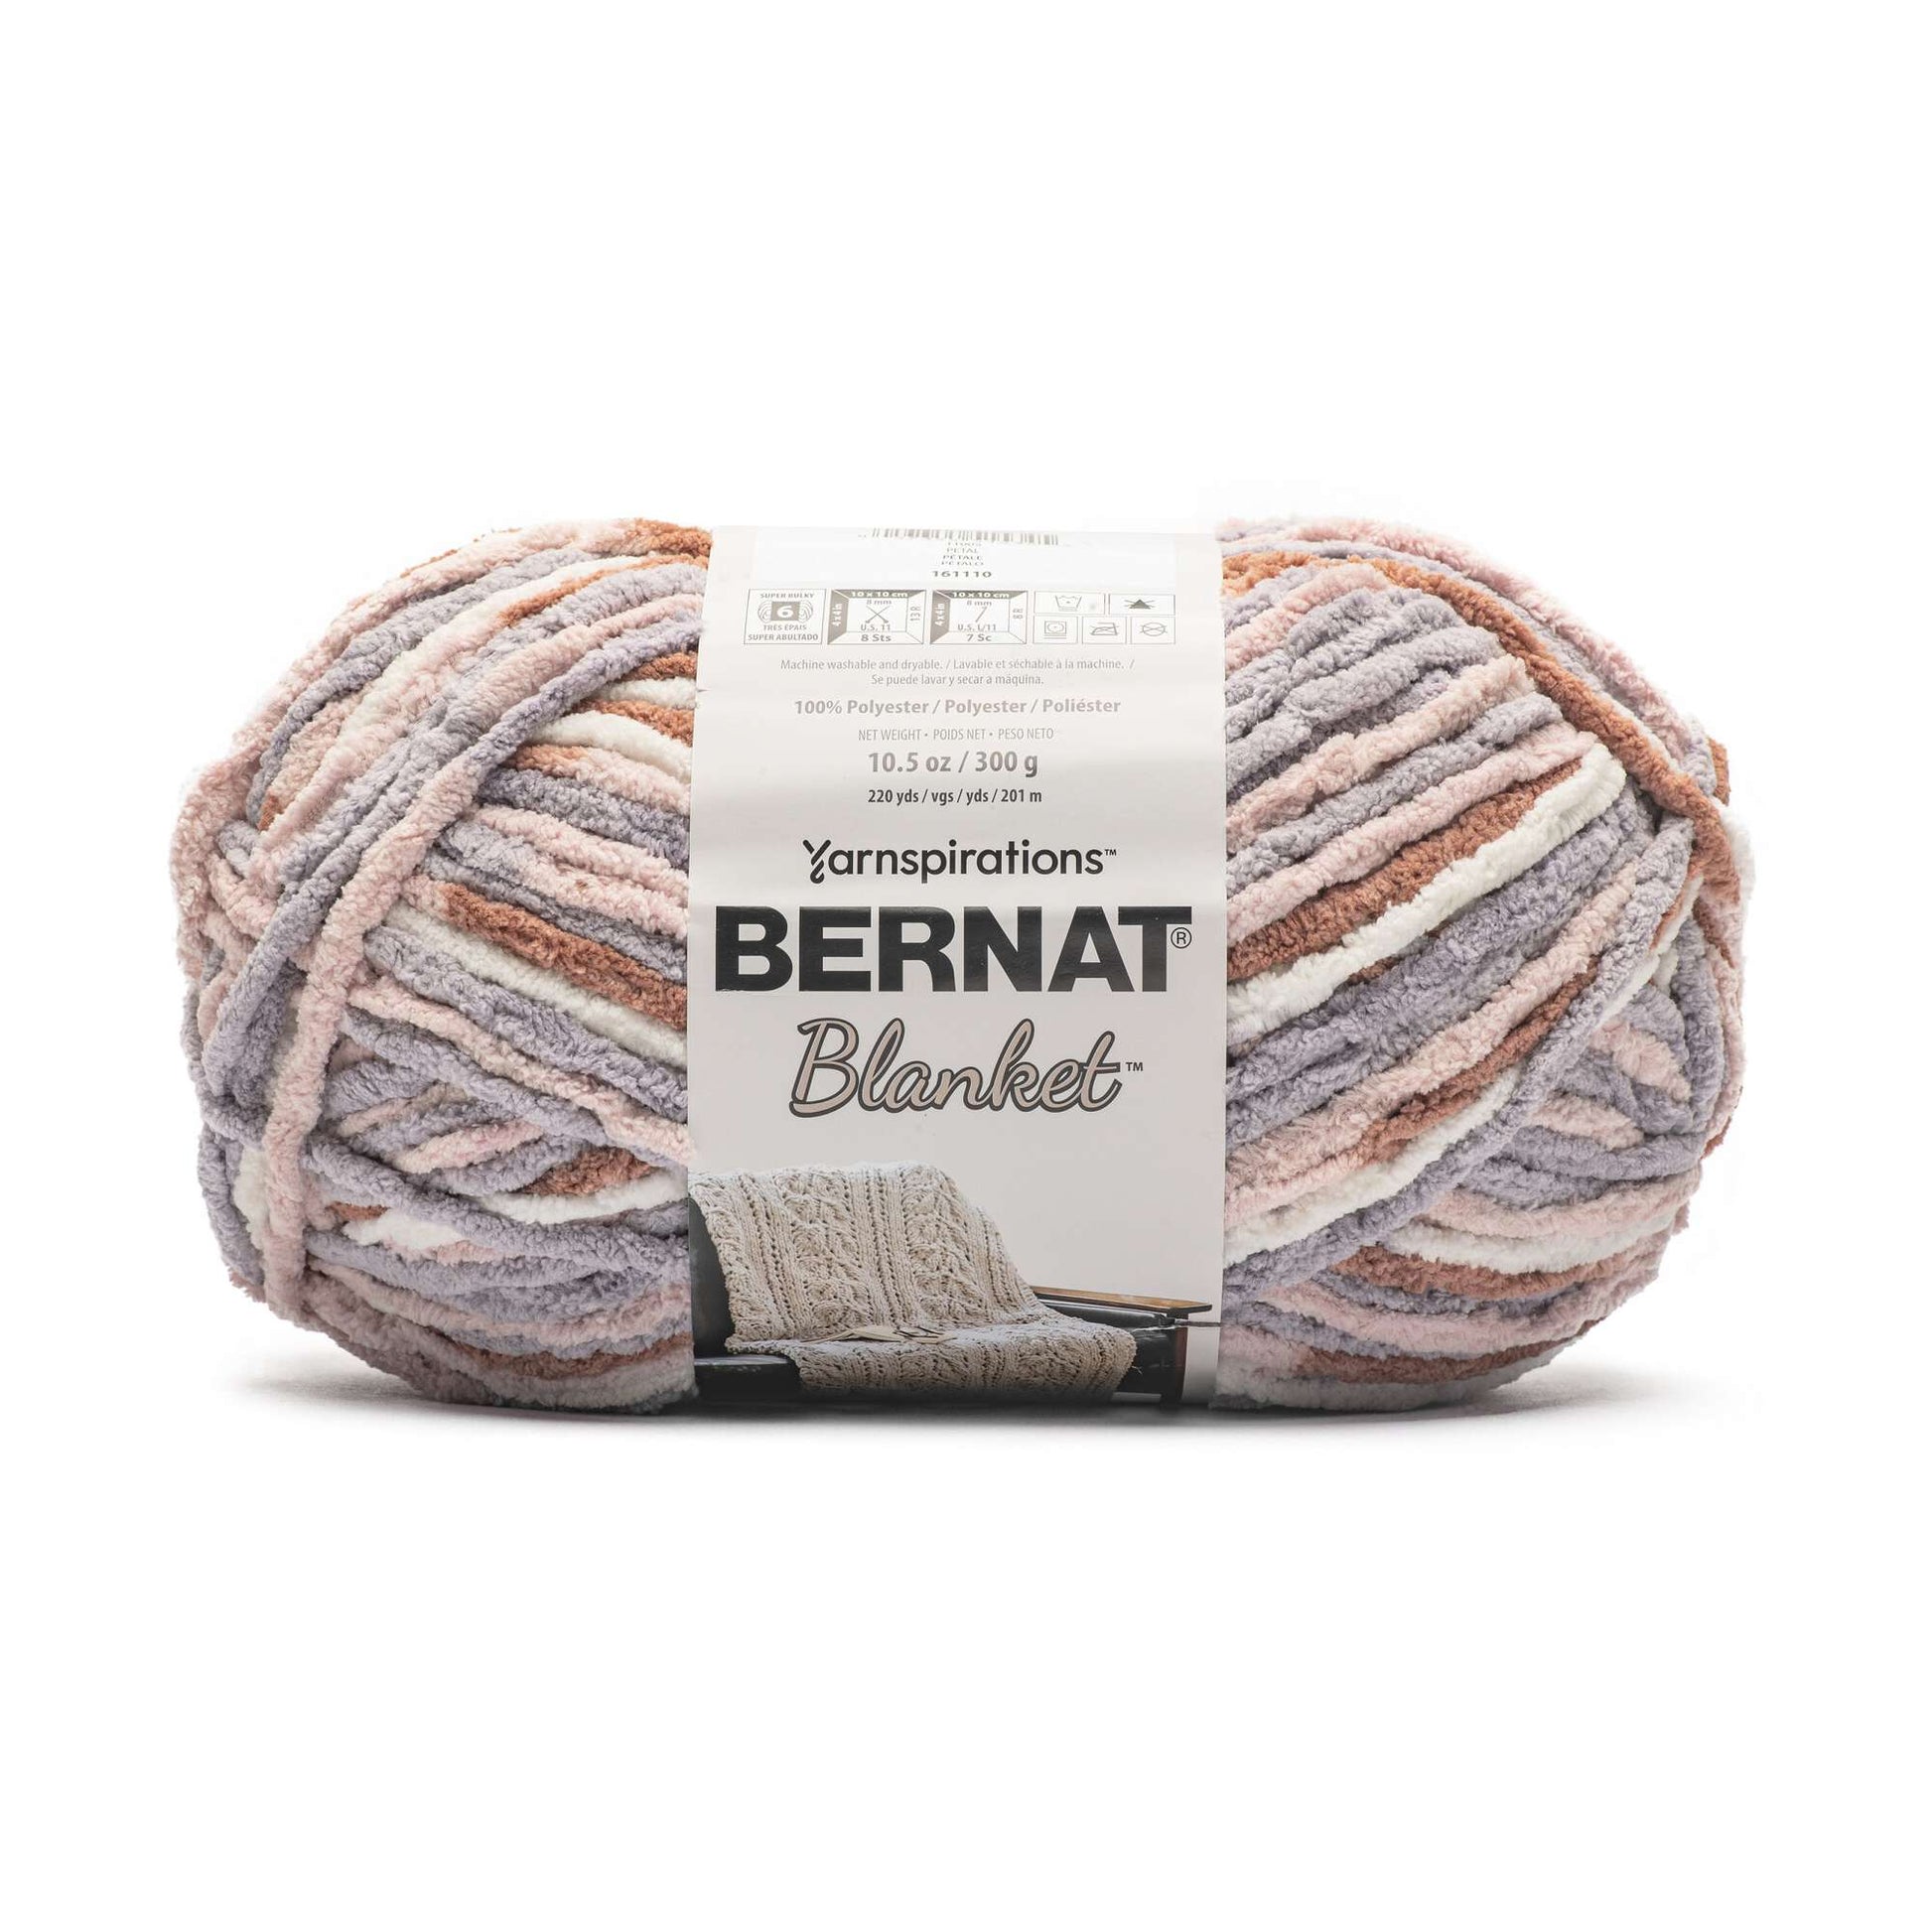 Bernat Blanket Yarn (300g/10.5 oz), Gray Storm